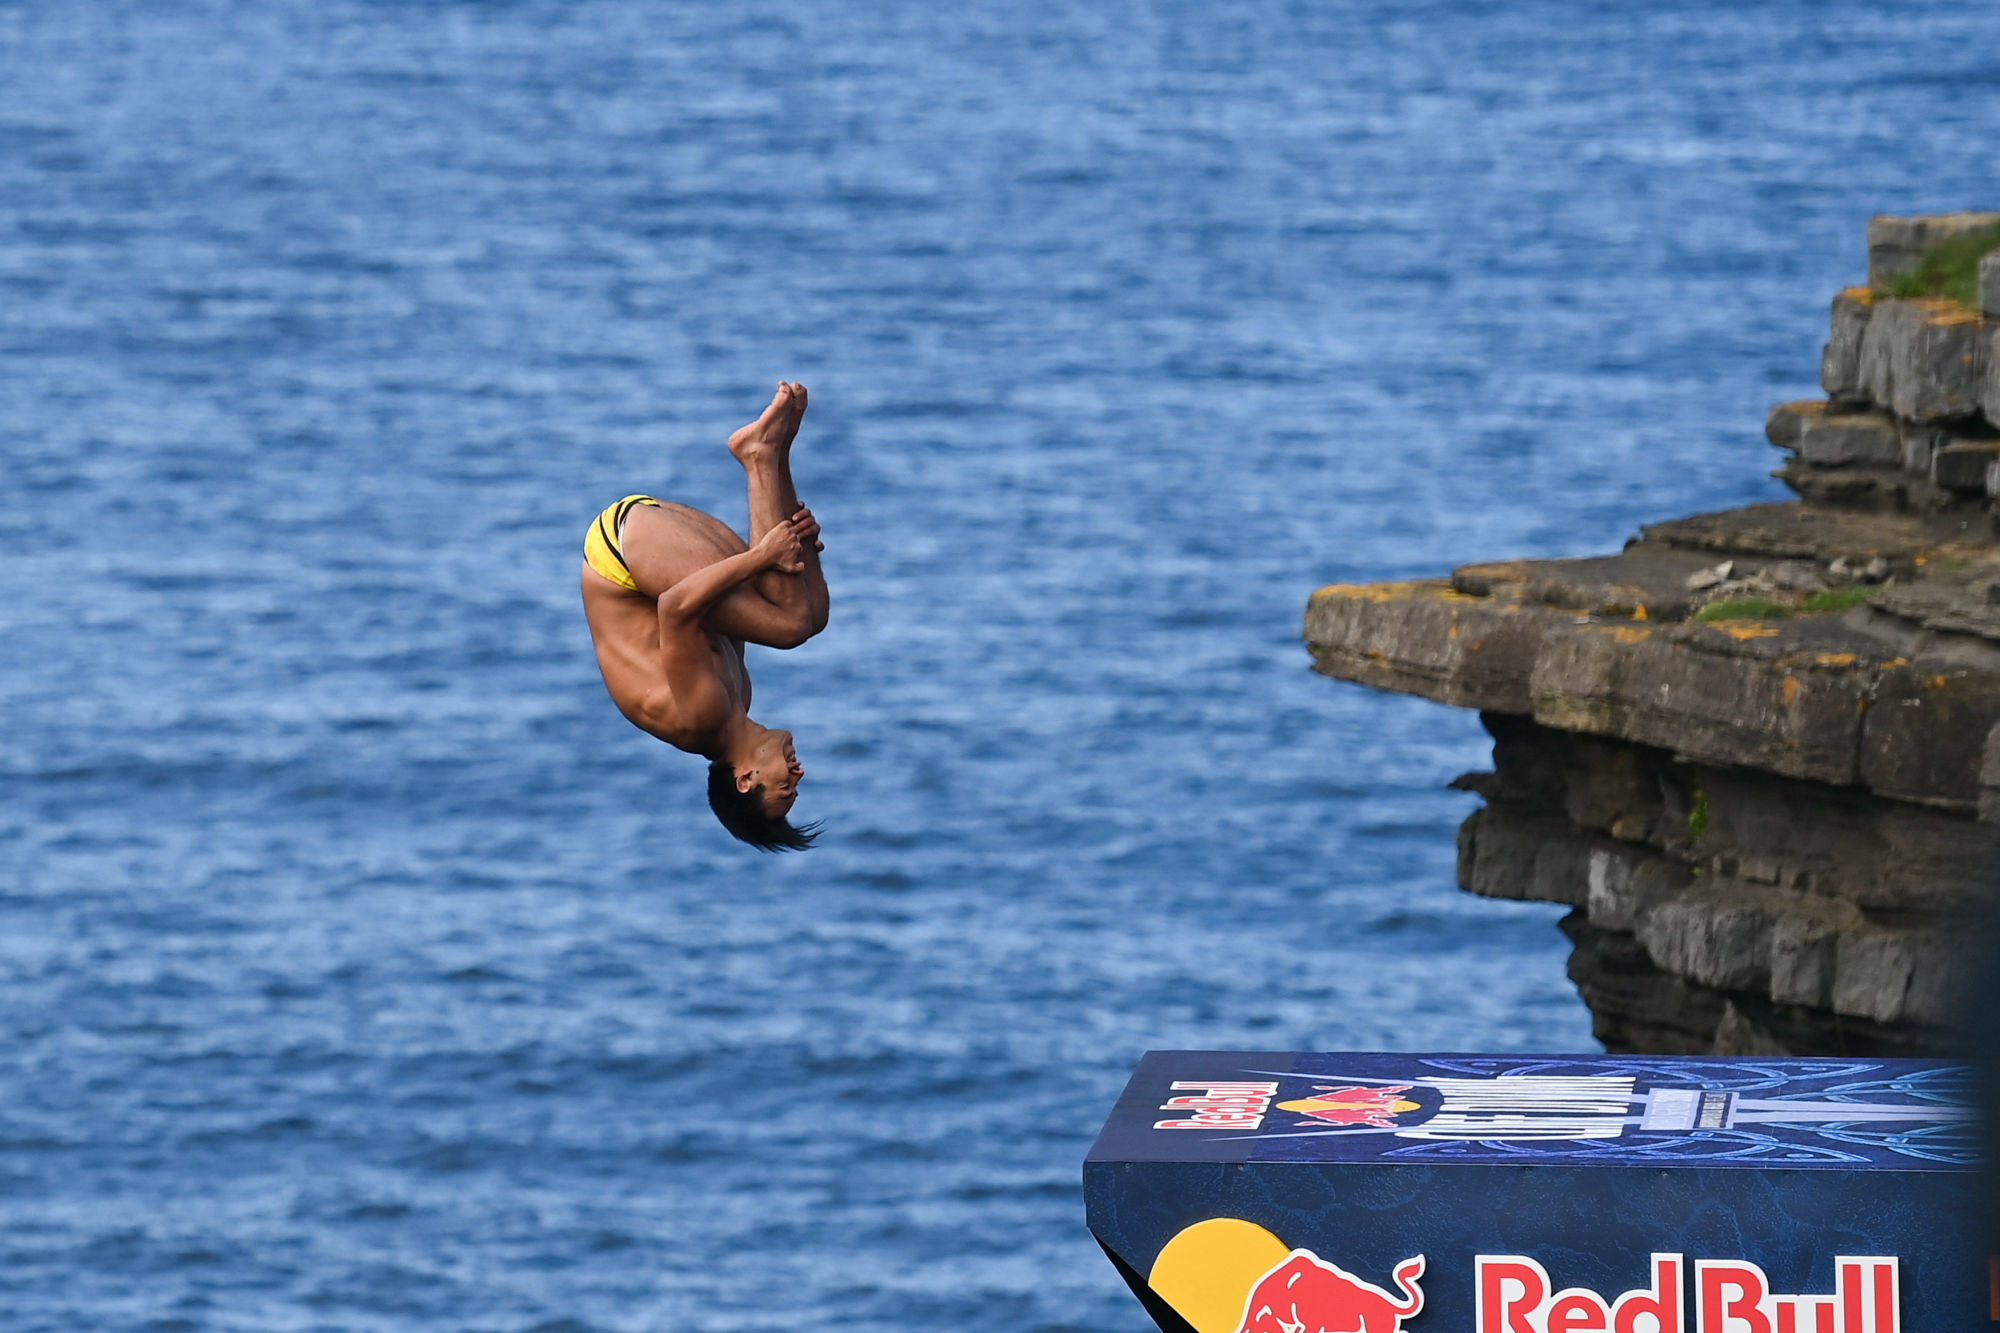 Juin 2021 : Saint-Raphaël accueille le Red Bull Cliff Diving World